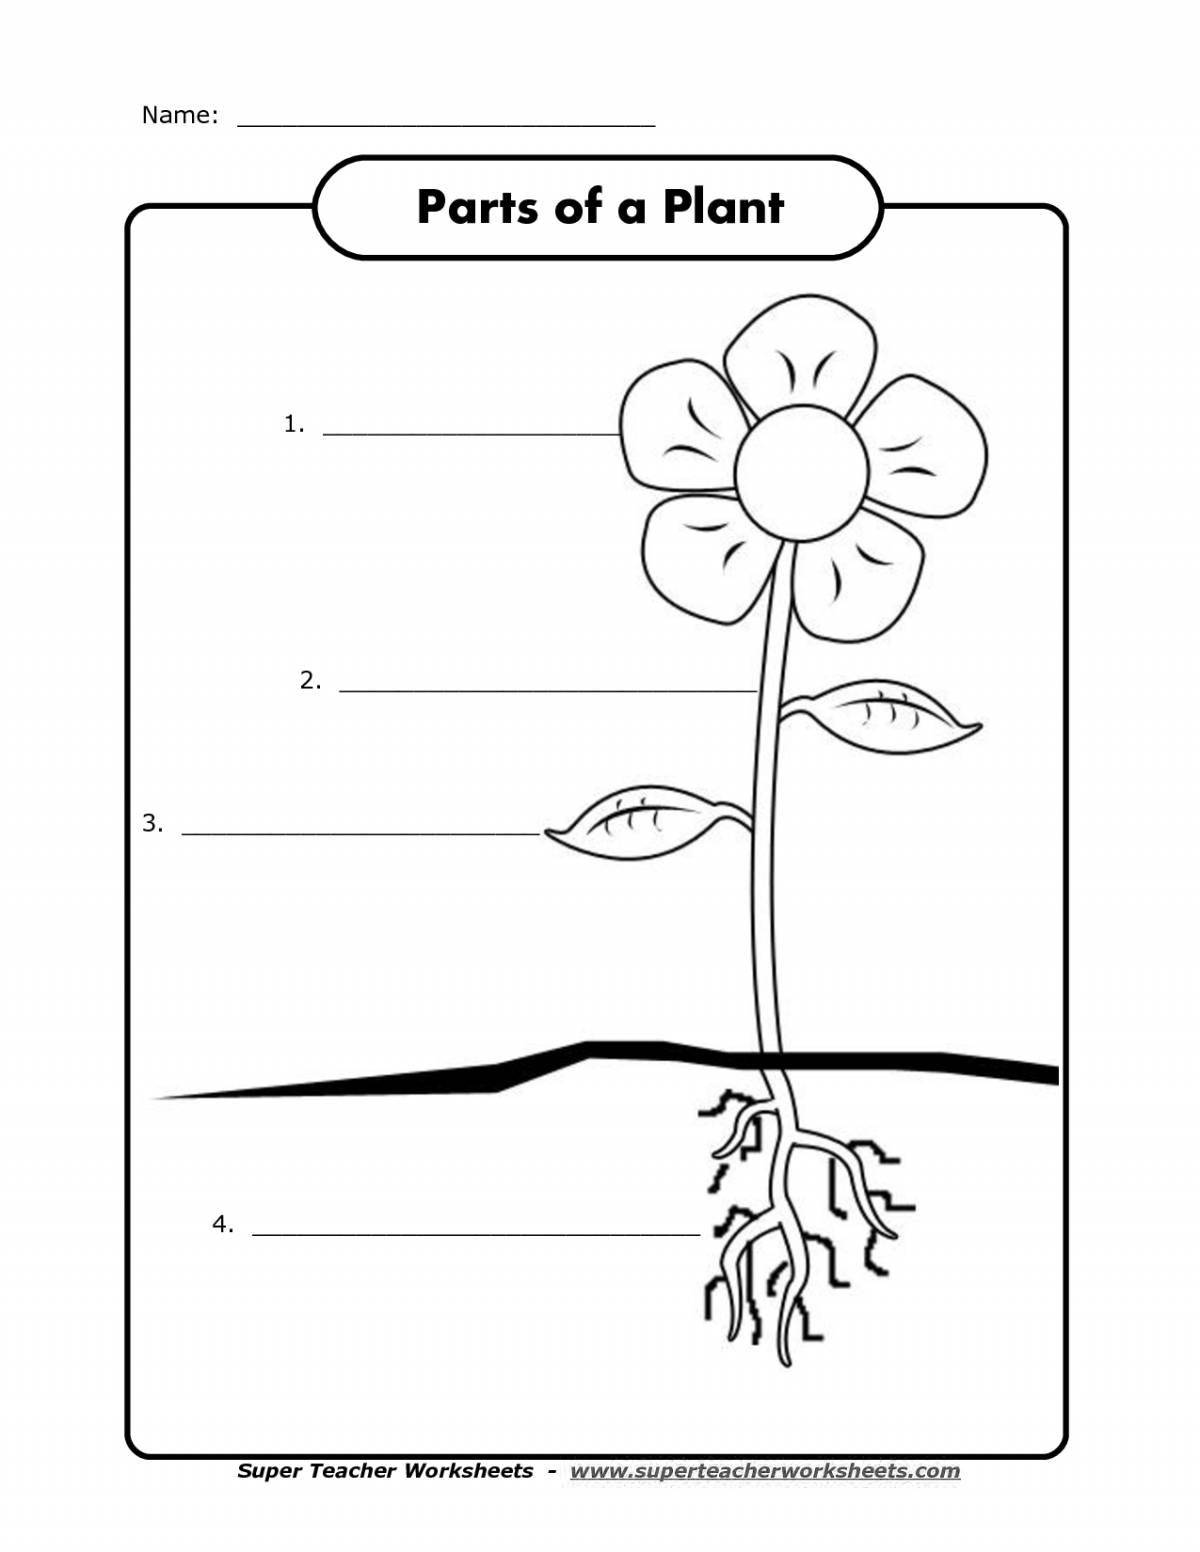 Bright plant parts for 1st grade children